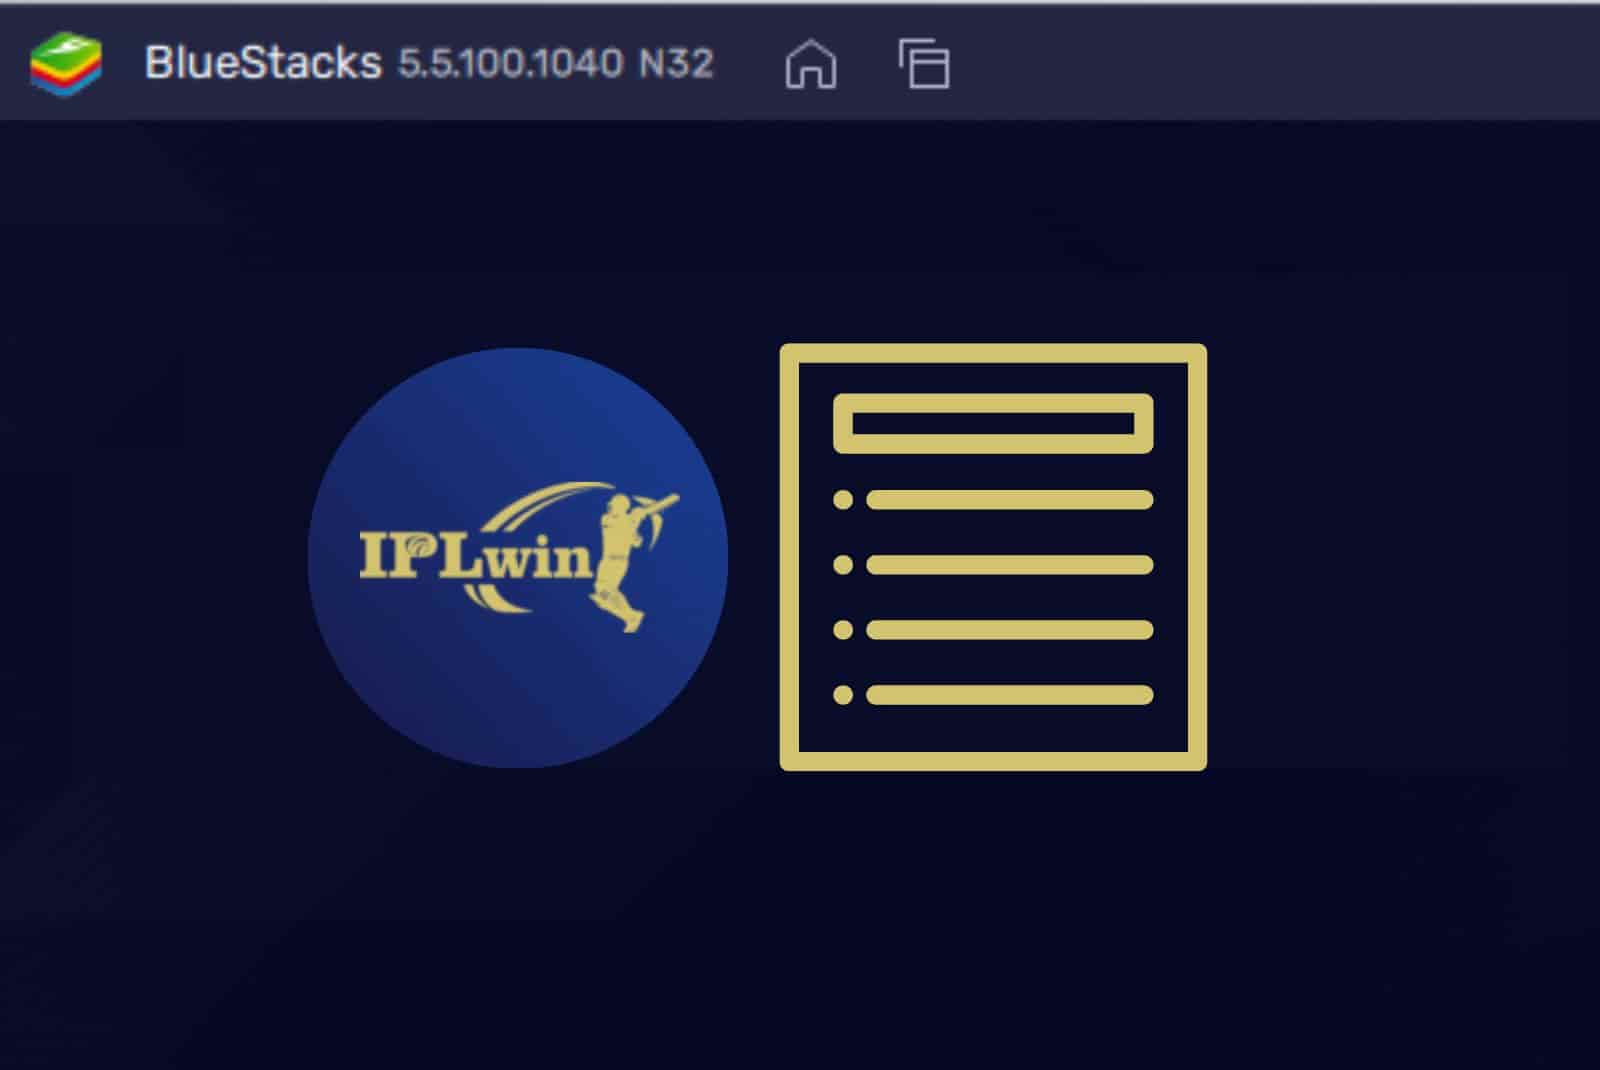 step Iplwin India with BlueStacks downloading instruction